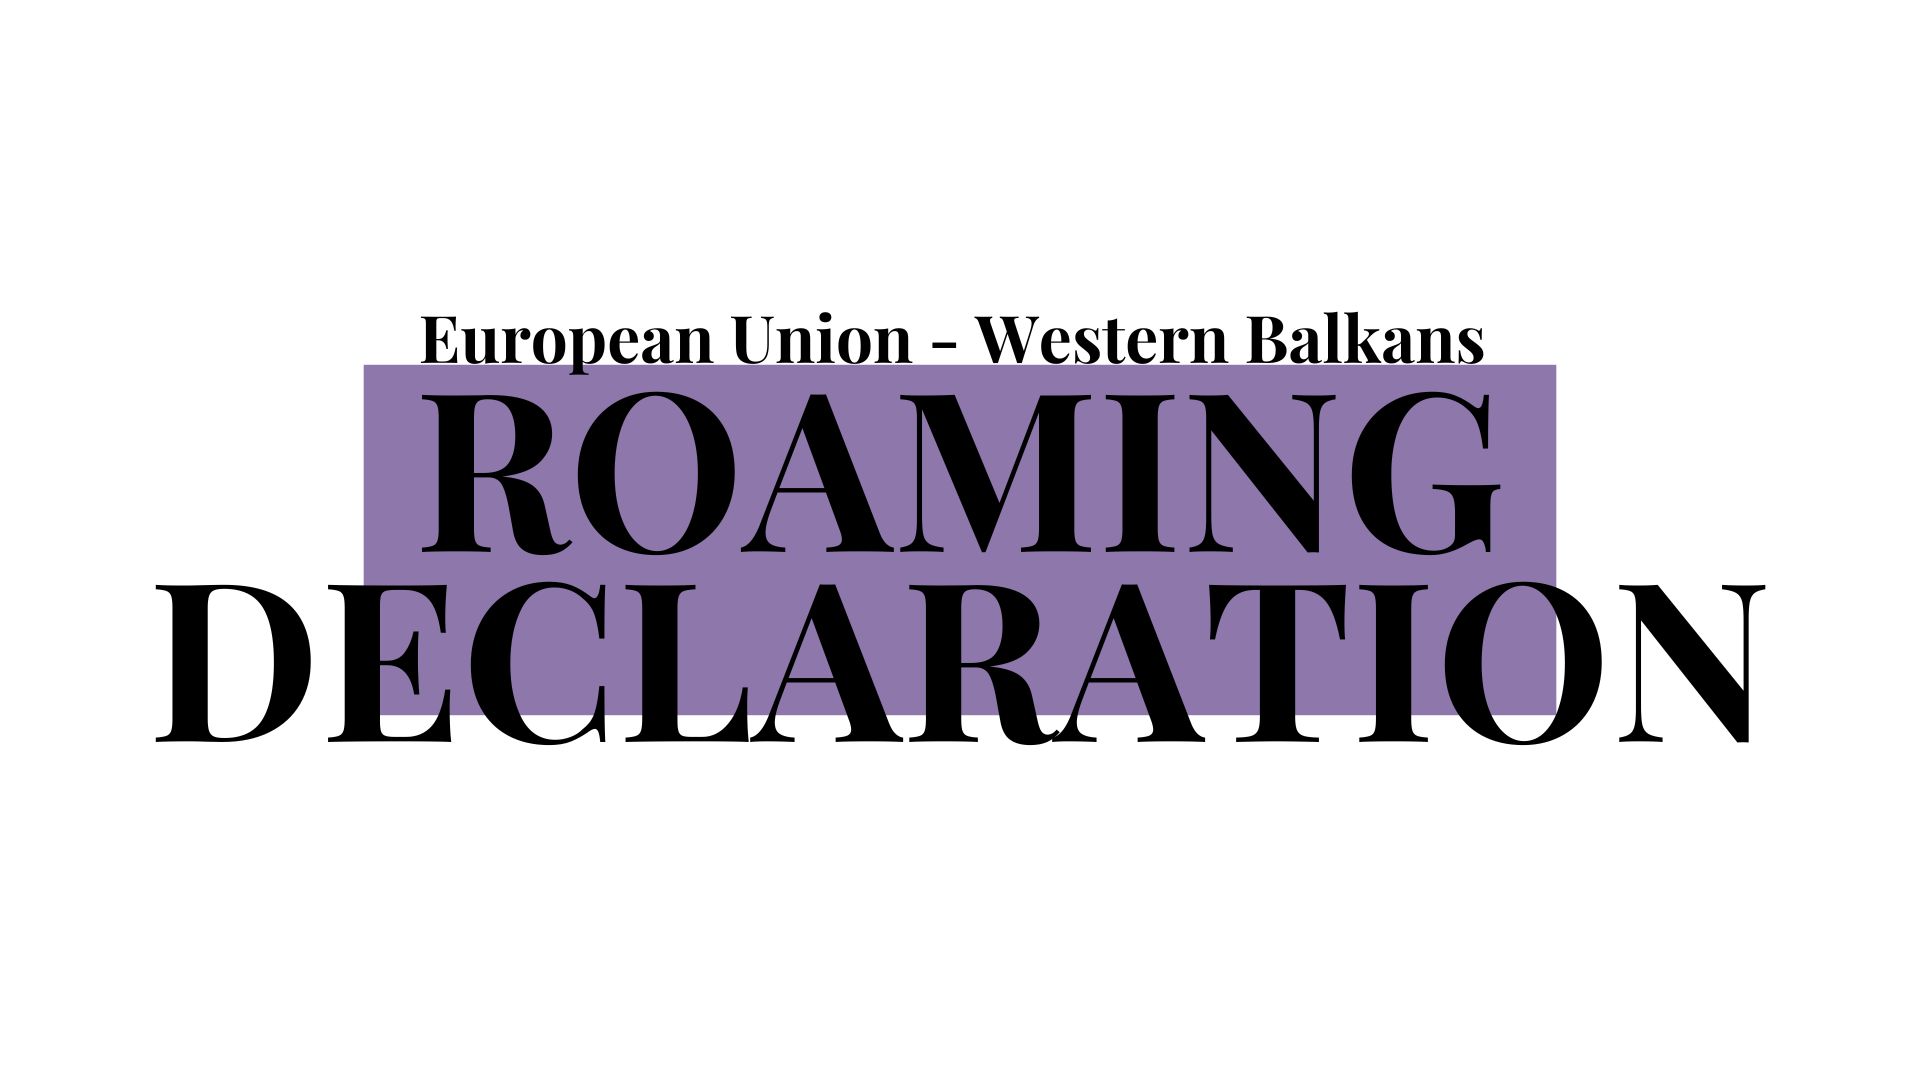 European Union - Western Balkans roaming declaration